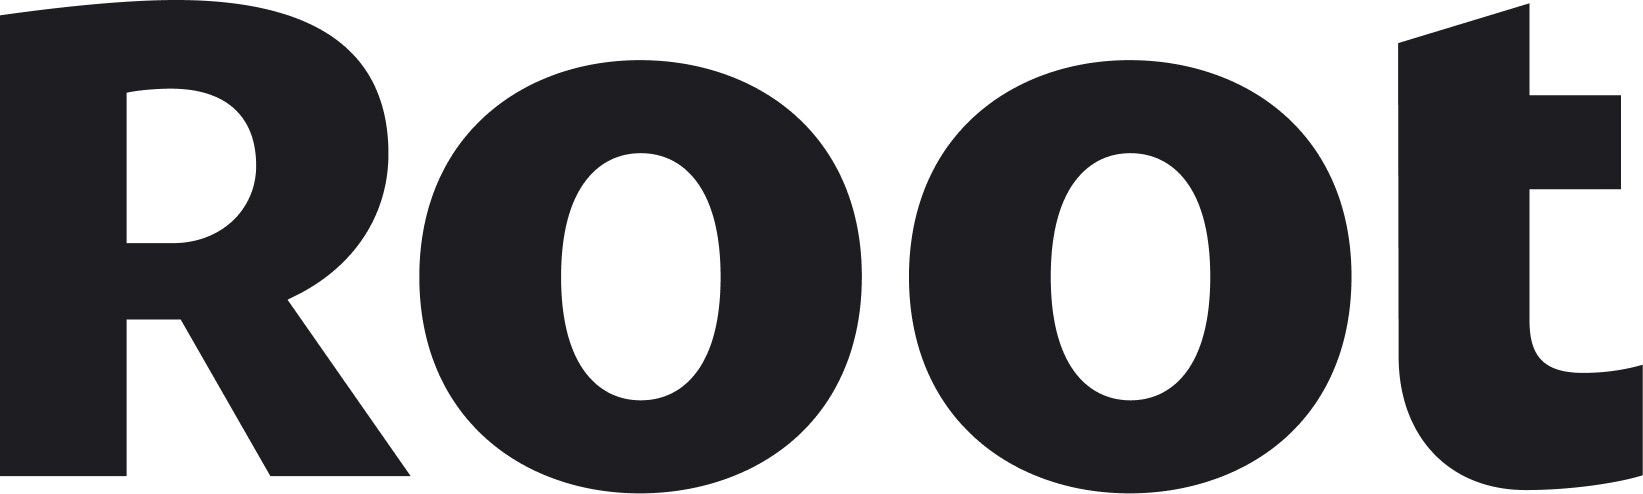 logo-root-black.jpg